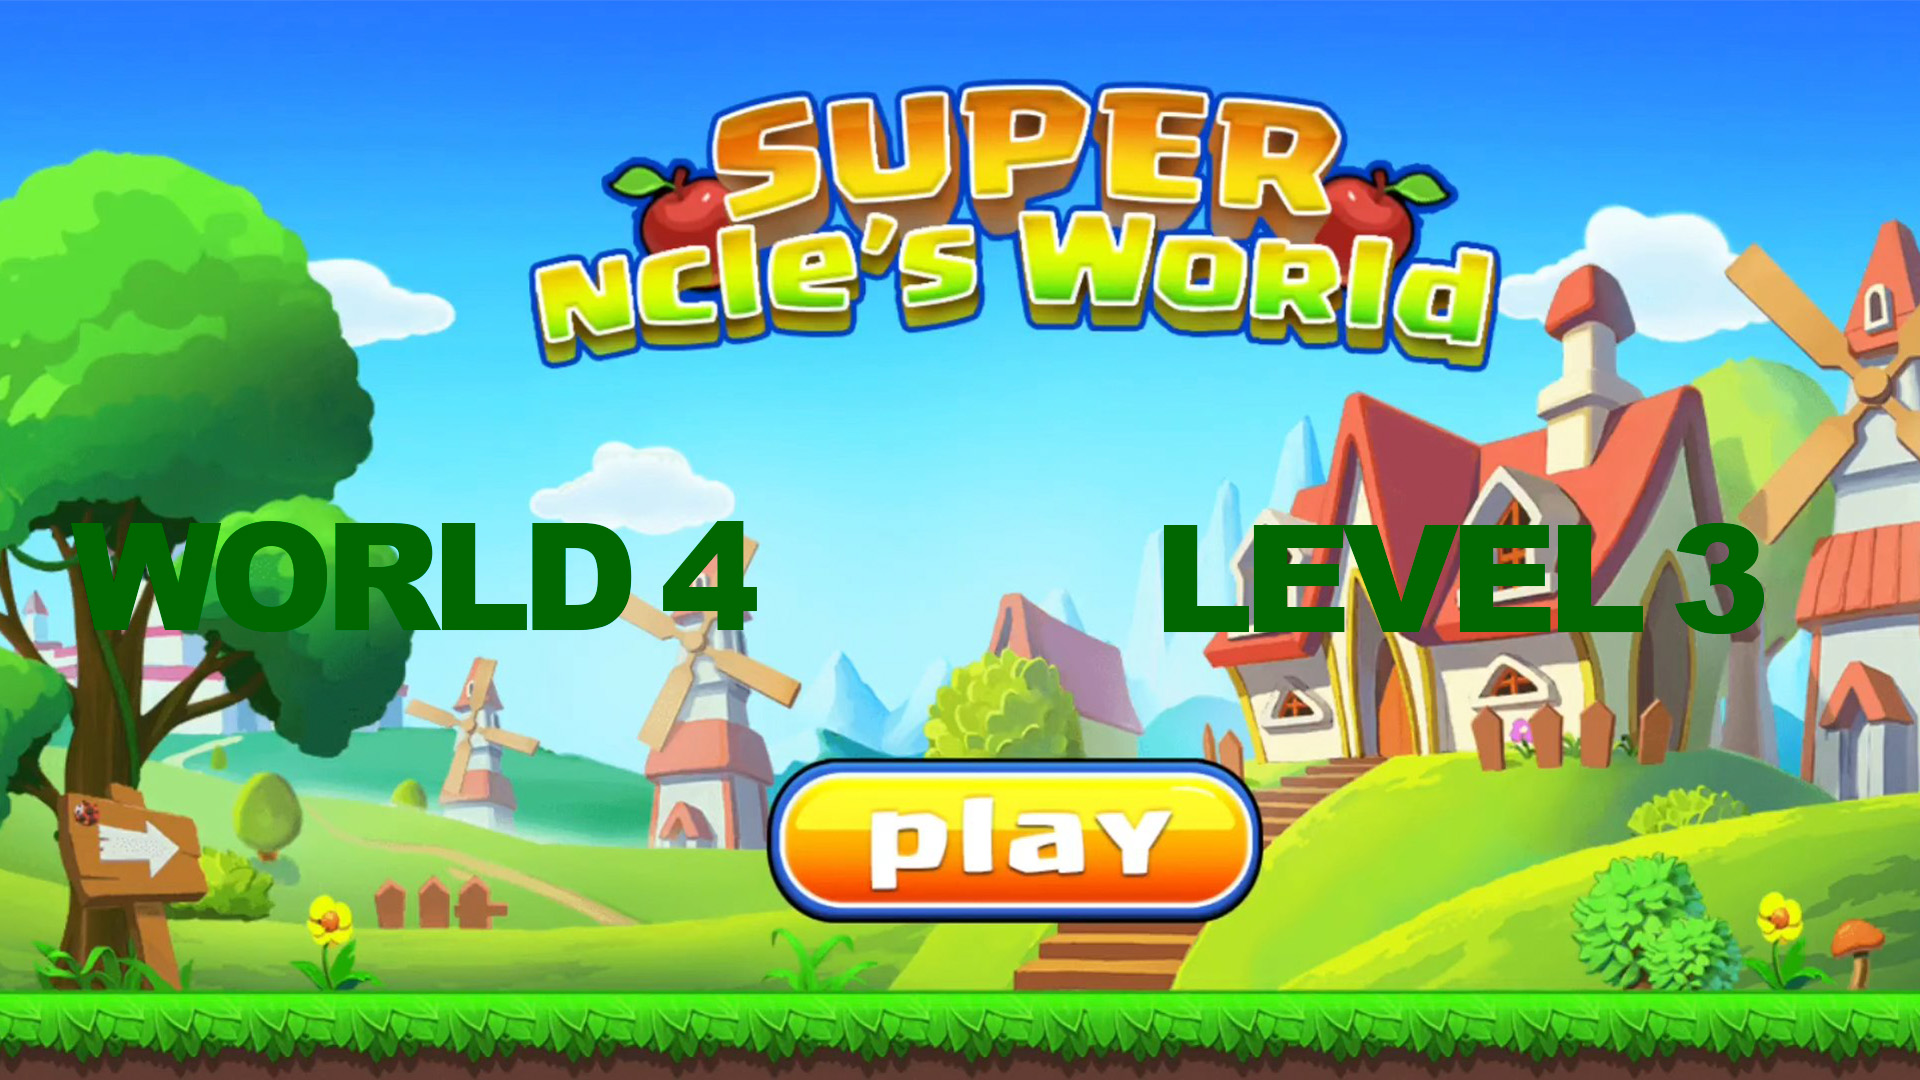 Super ncle's  World 4. Level 3.